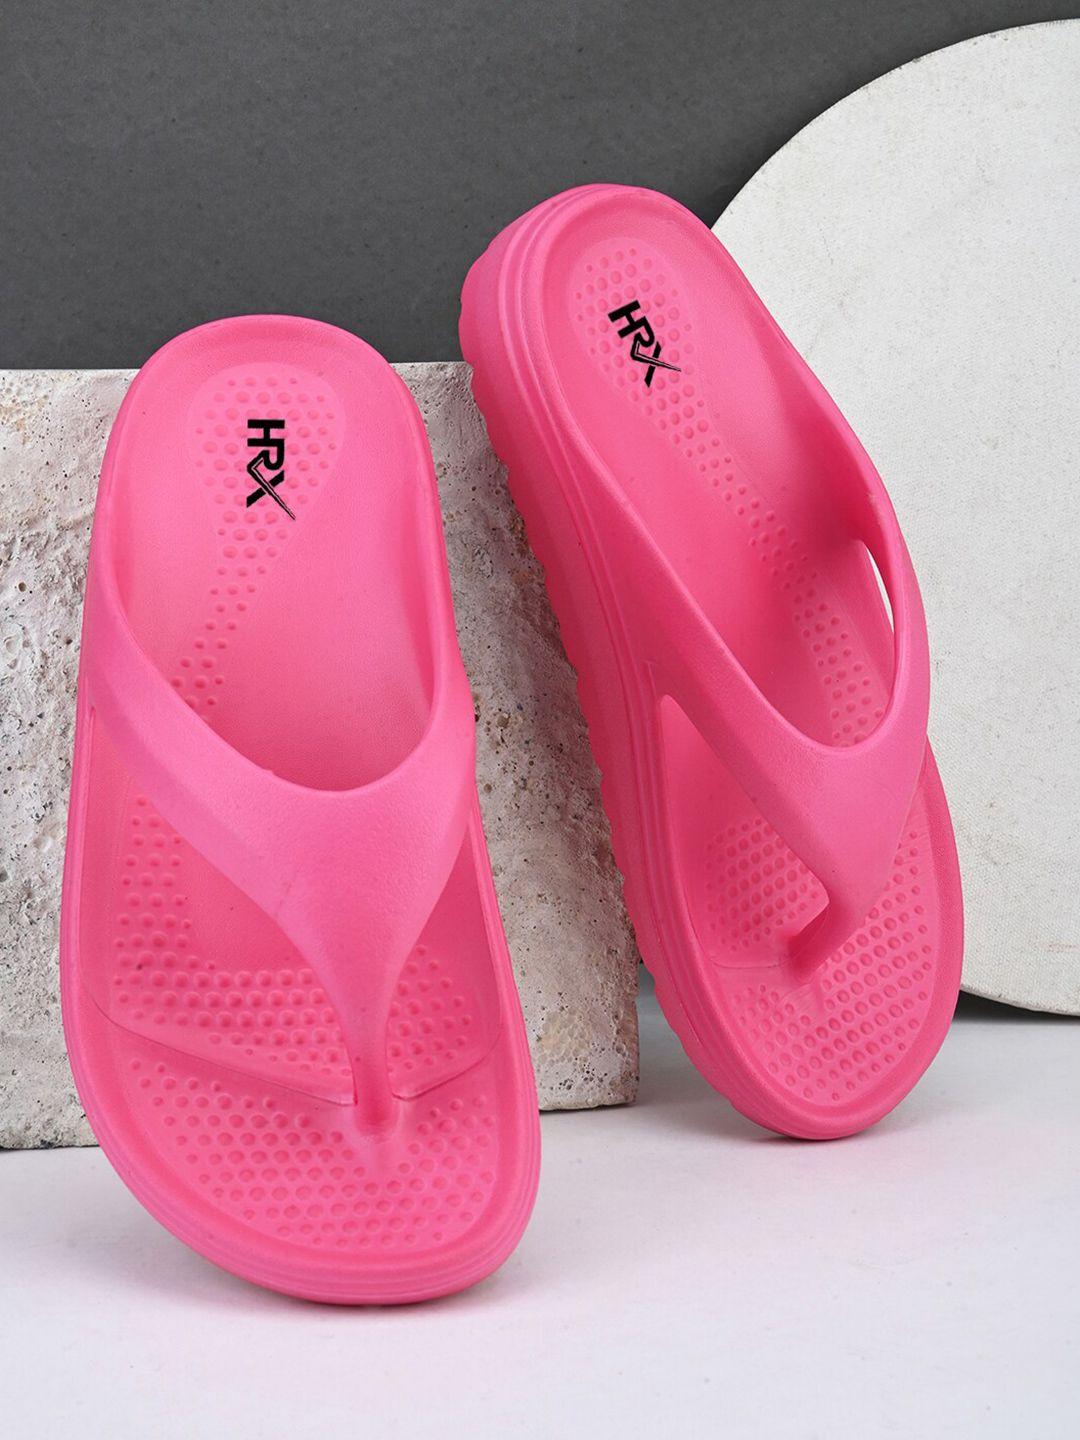 hrx by hrithik roshan women pink textured thong flip-flops